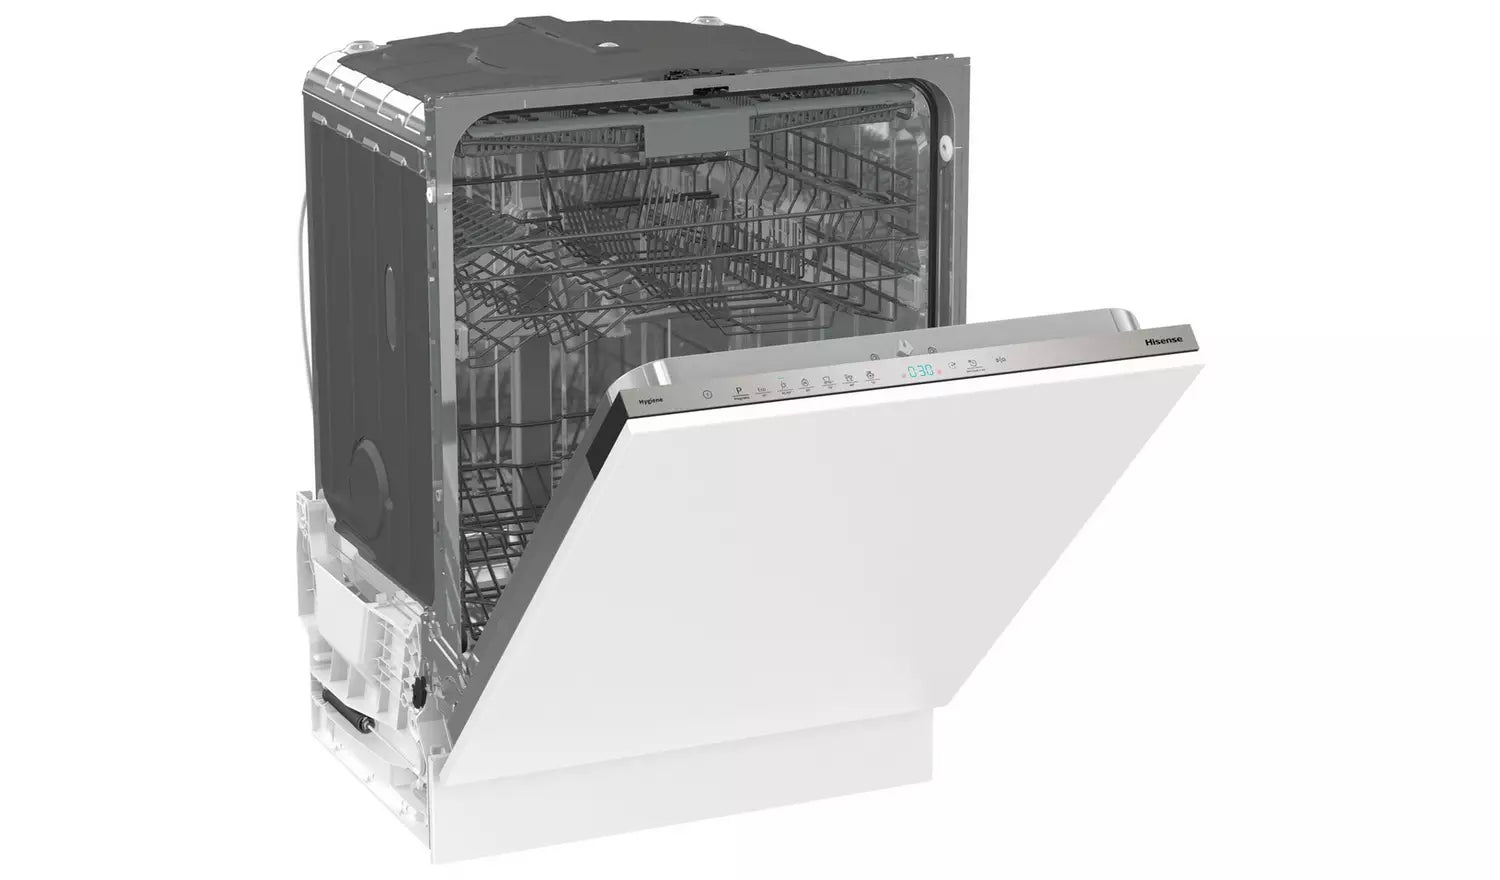 Hisense HV643D60UK Fully Integrated Standard Dishwasher - Stainless Steel Control Panel (EX-DISPLAY/B)